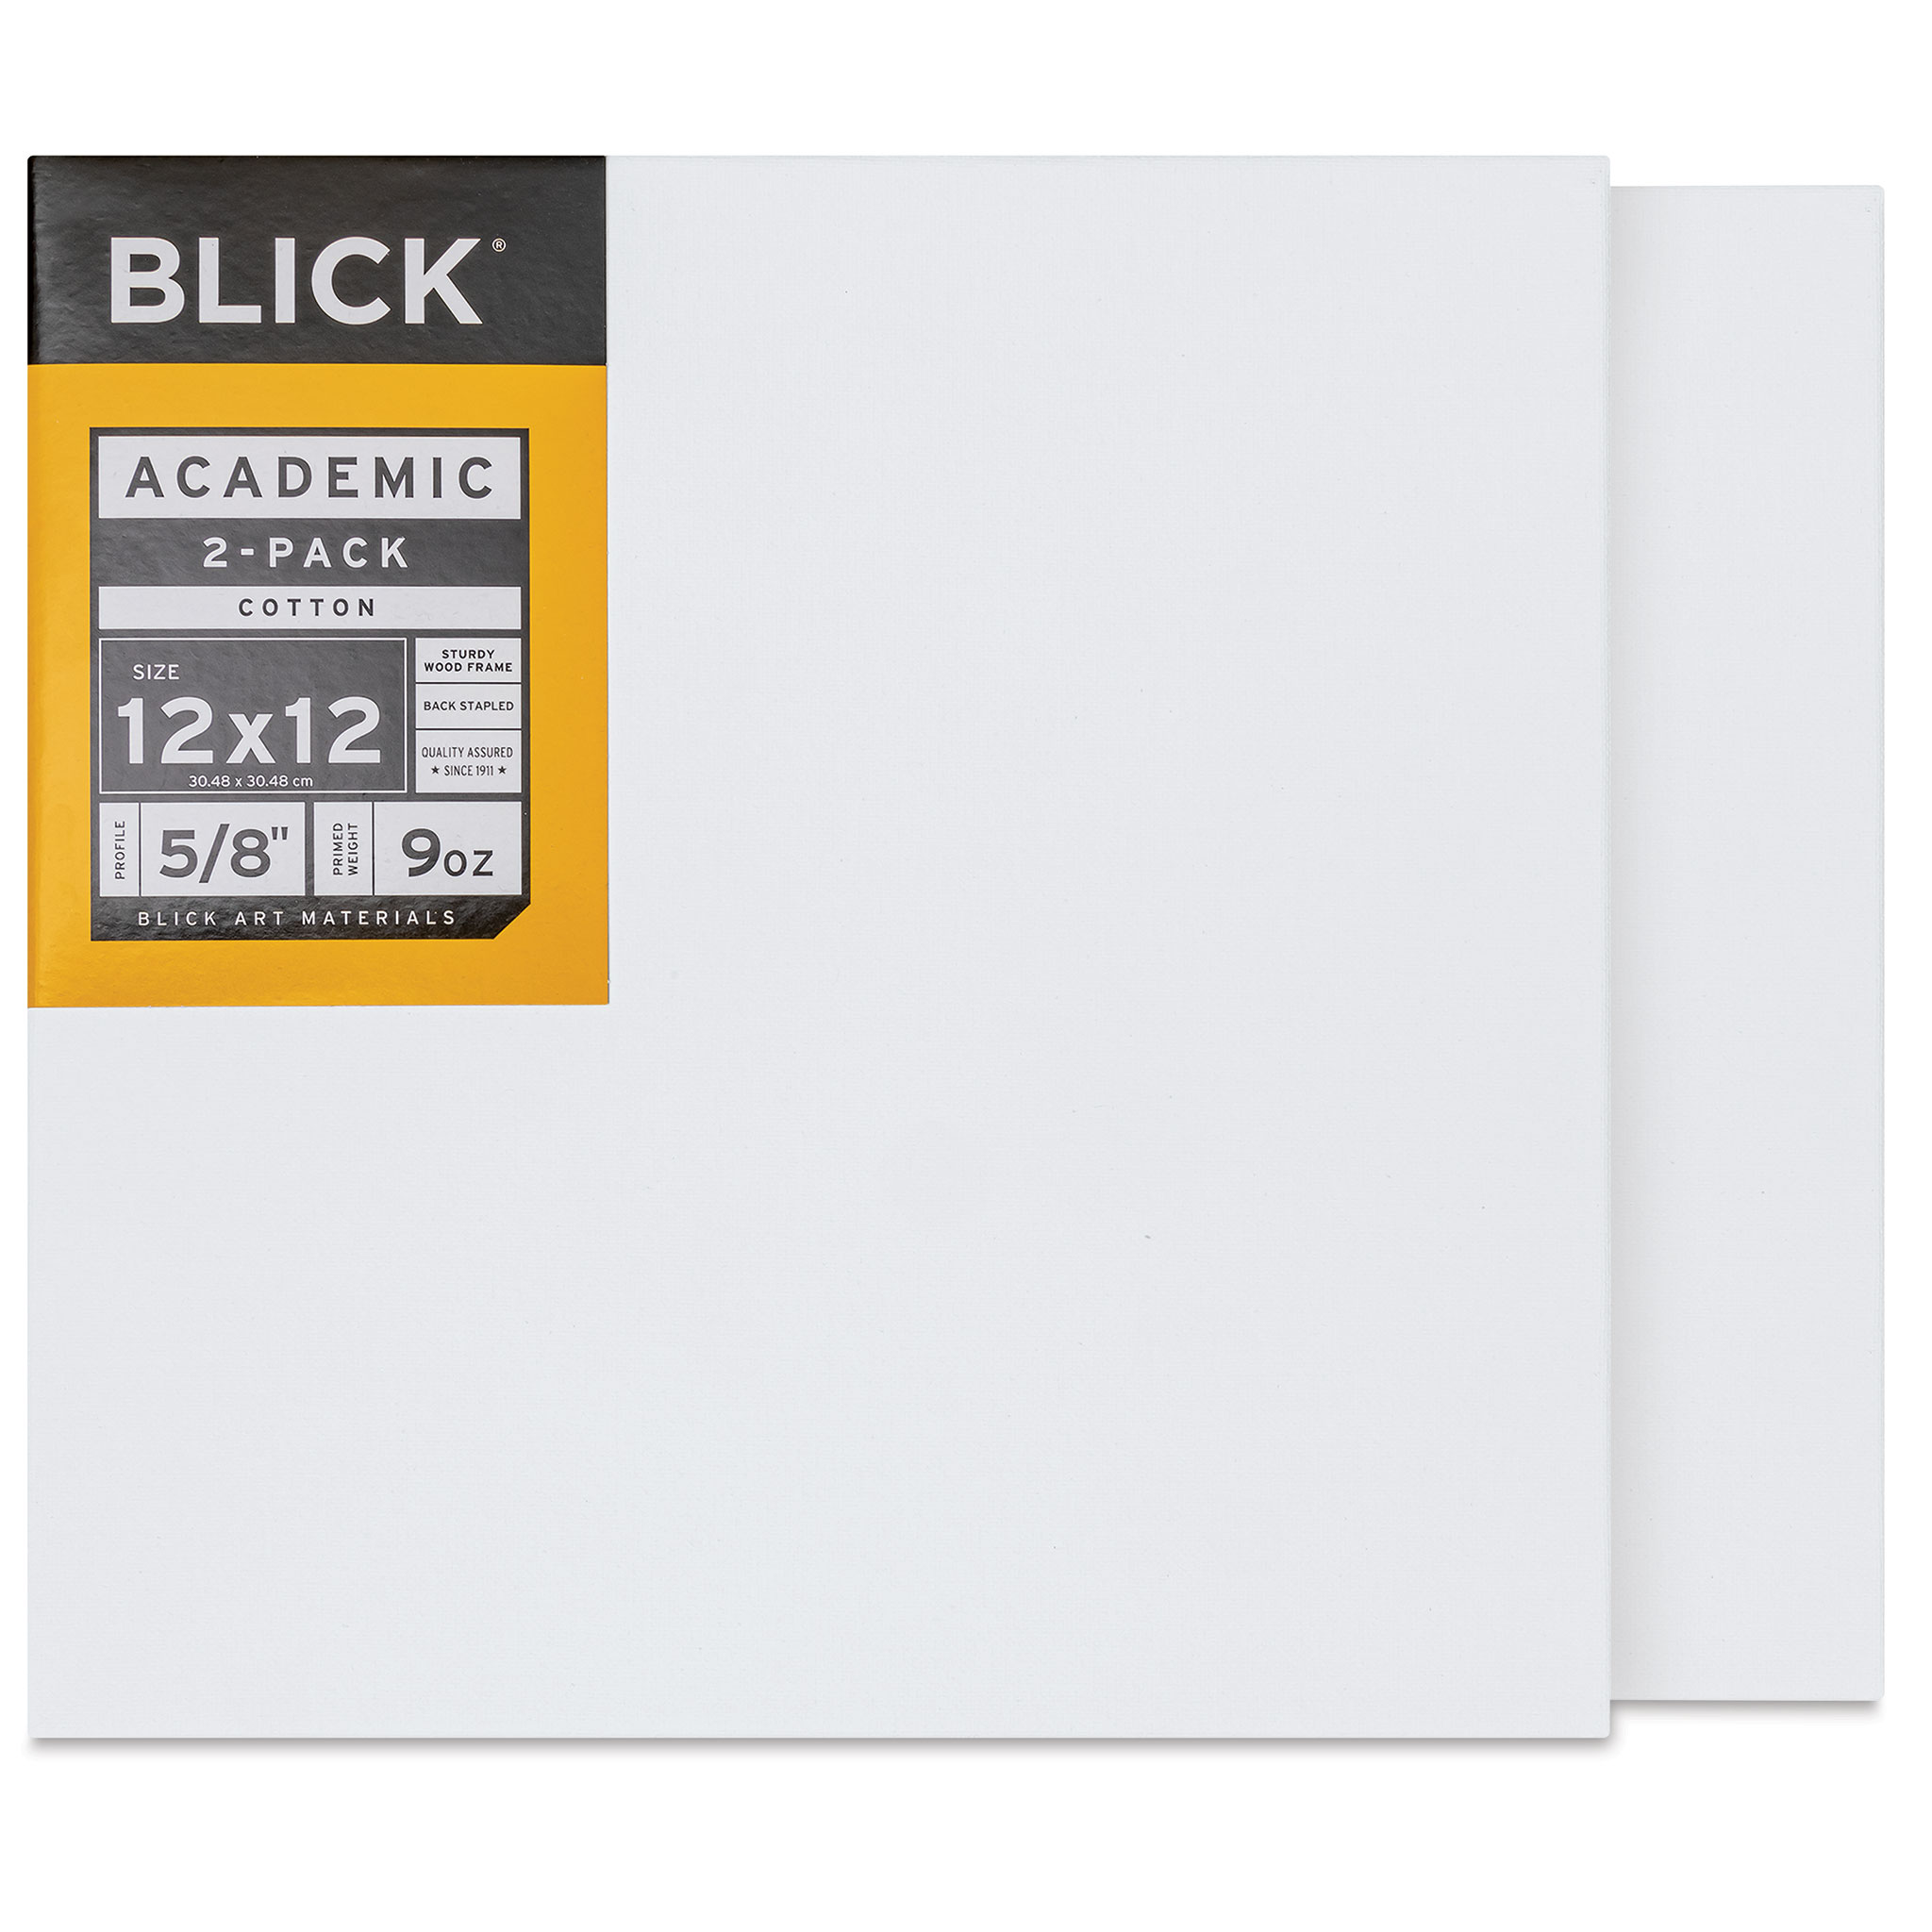 Blick Academic Canvas 2-Packs